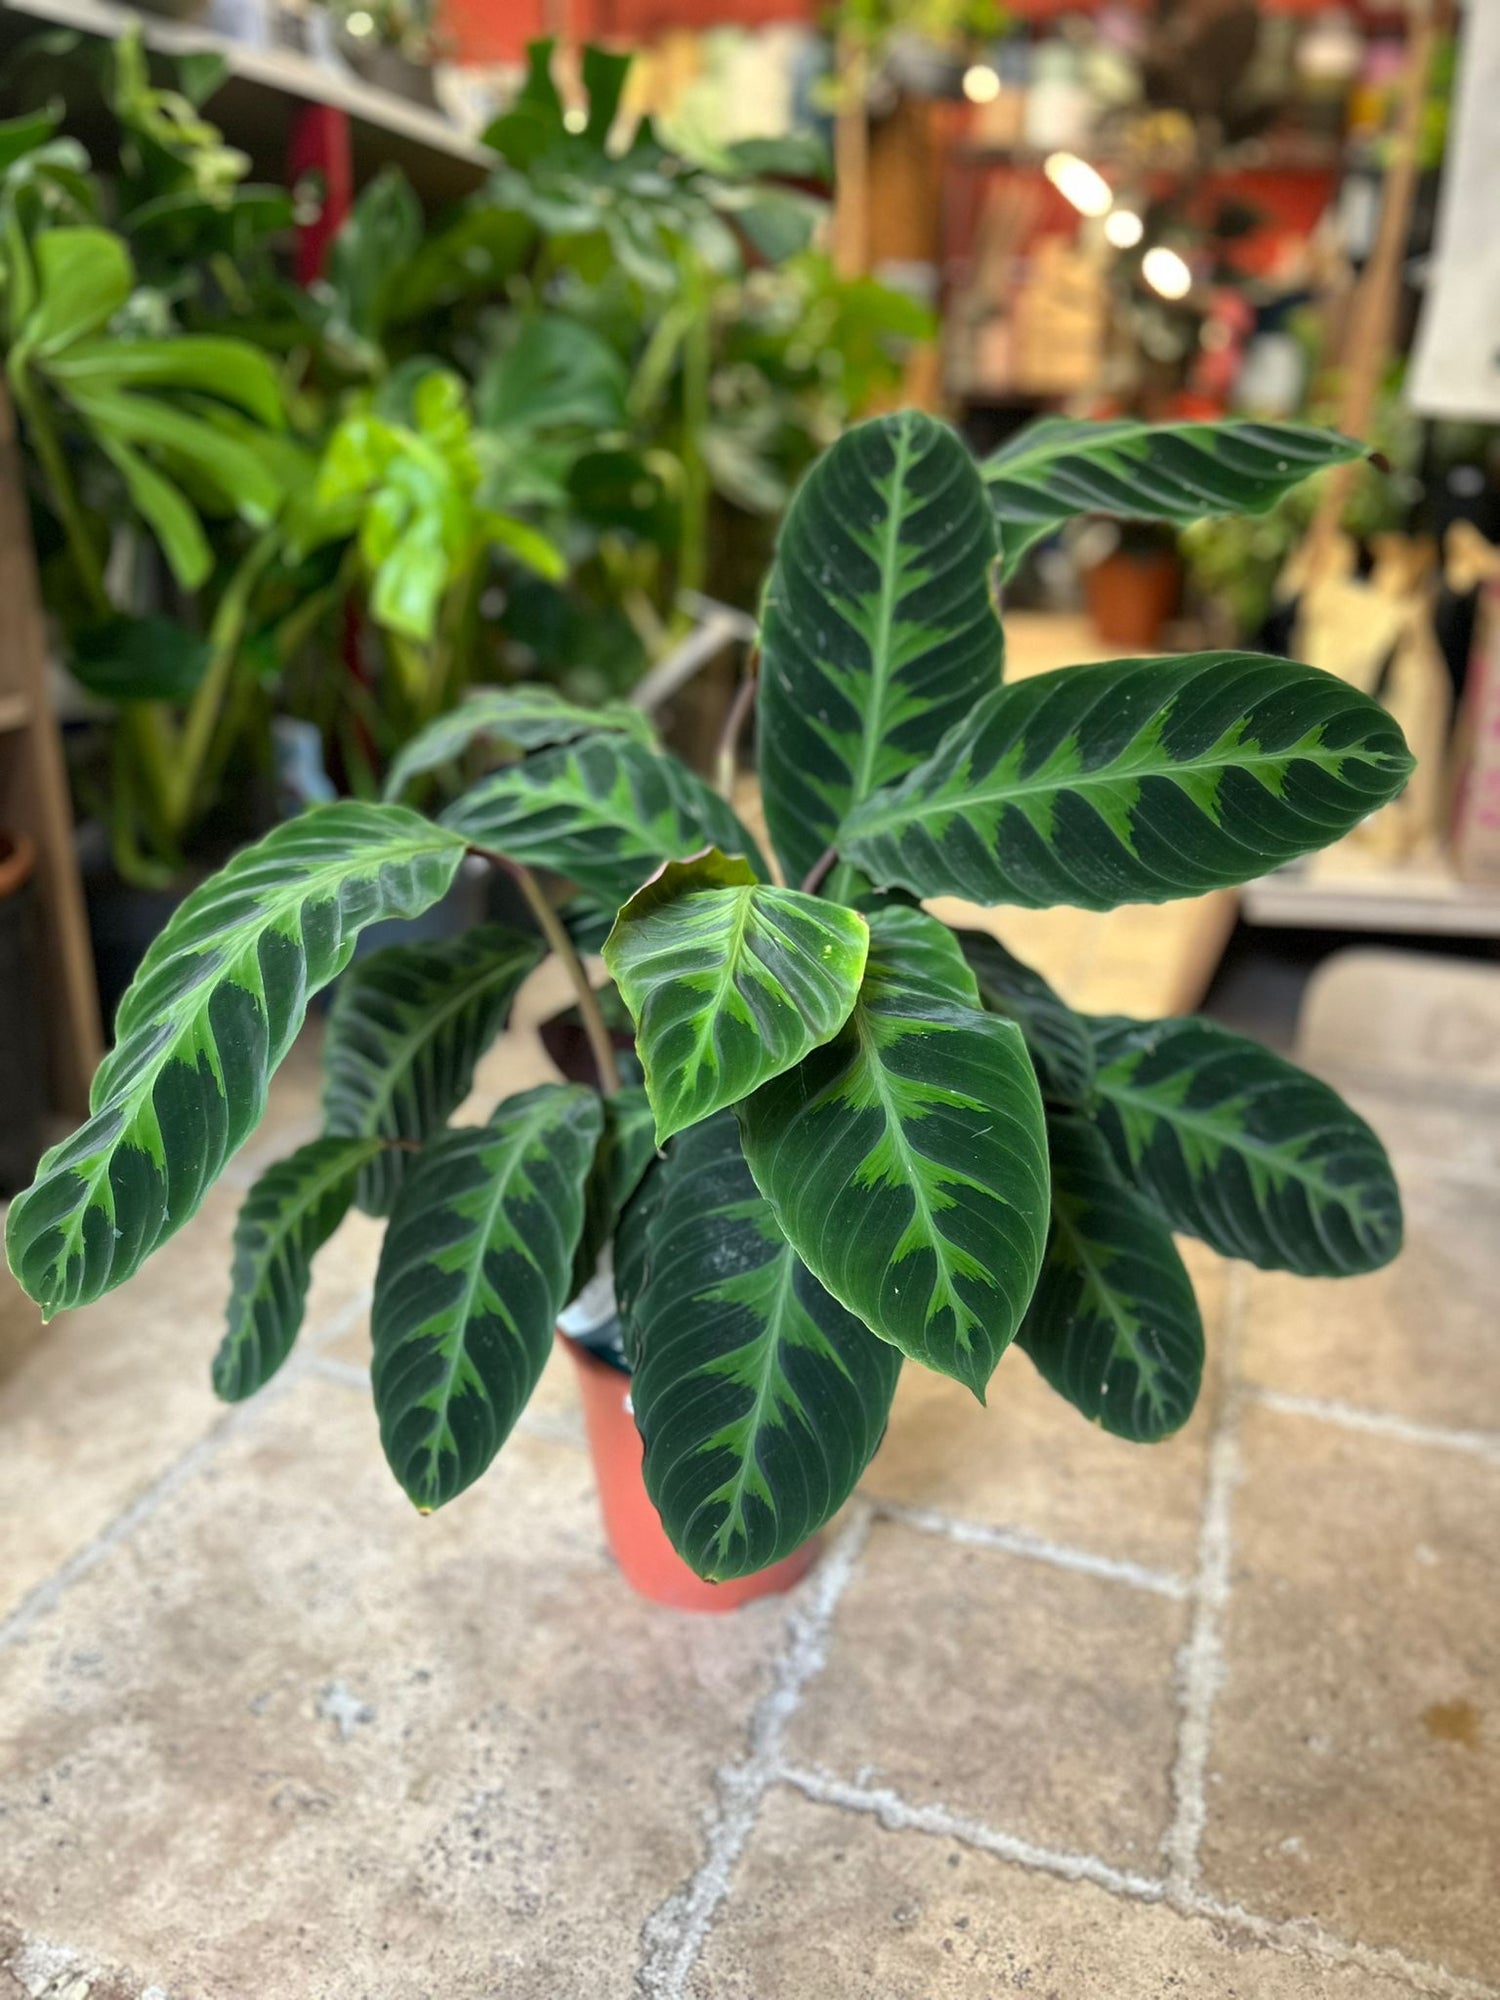 Goeppertia warscewiczii syn. Calathea warscewiczii (Jungle Velvet/ Prayer Plant)